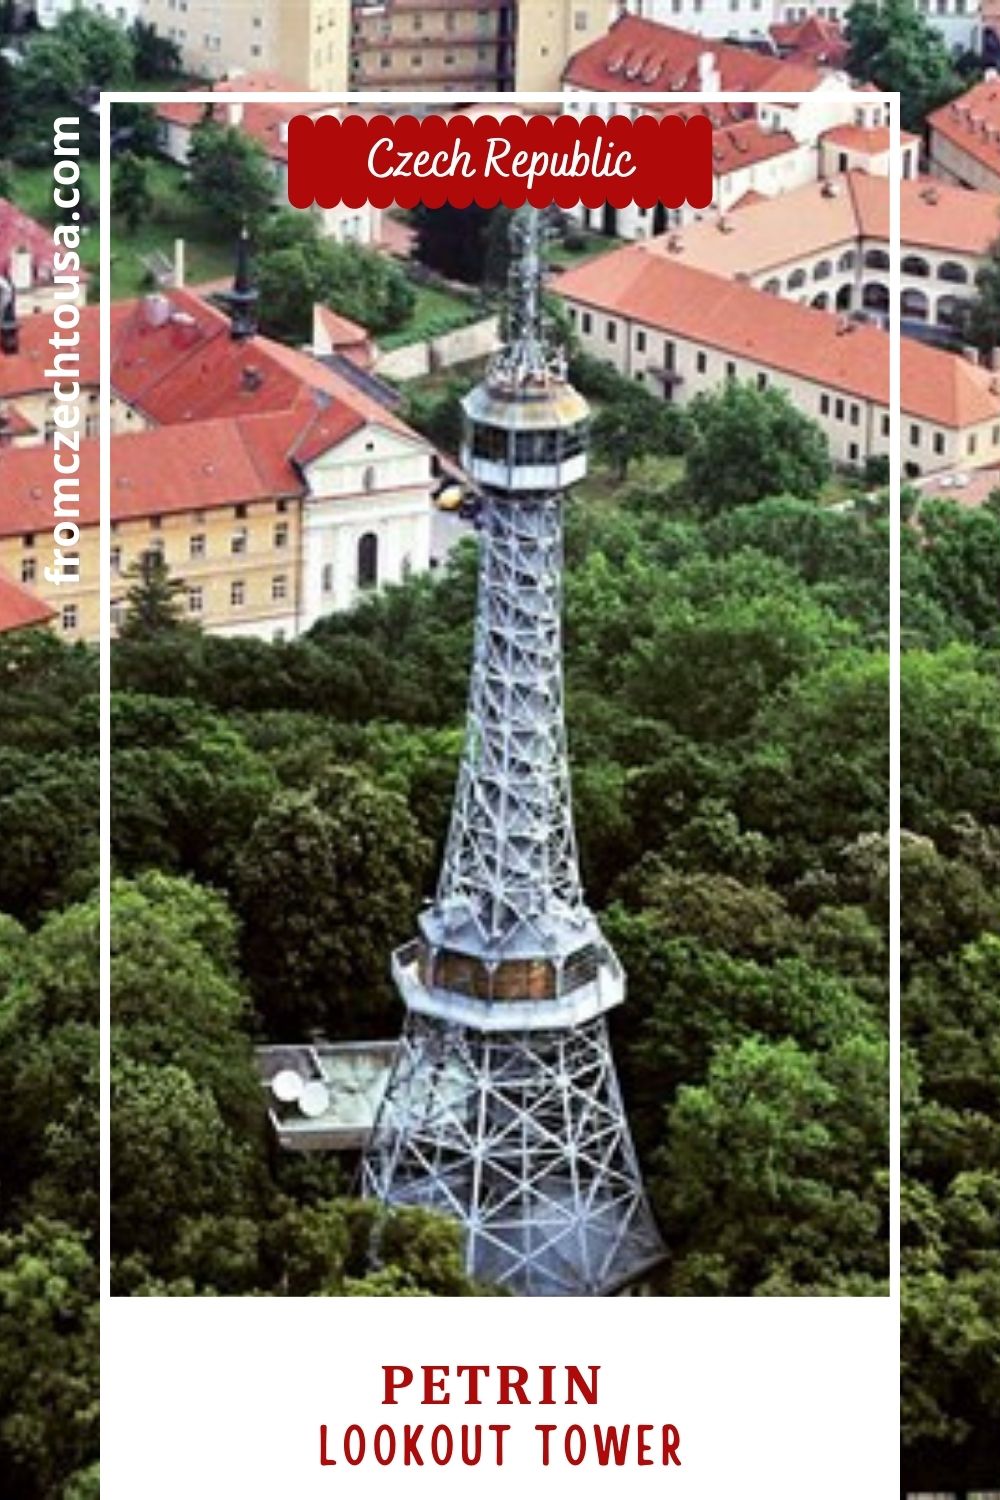 The Petrin Lookout Tower - Prague